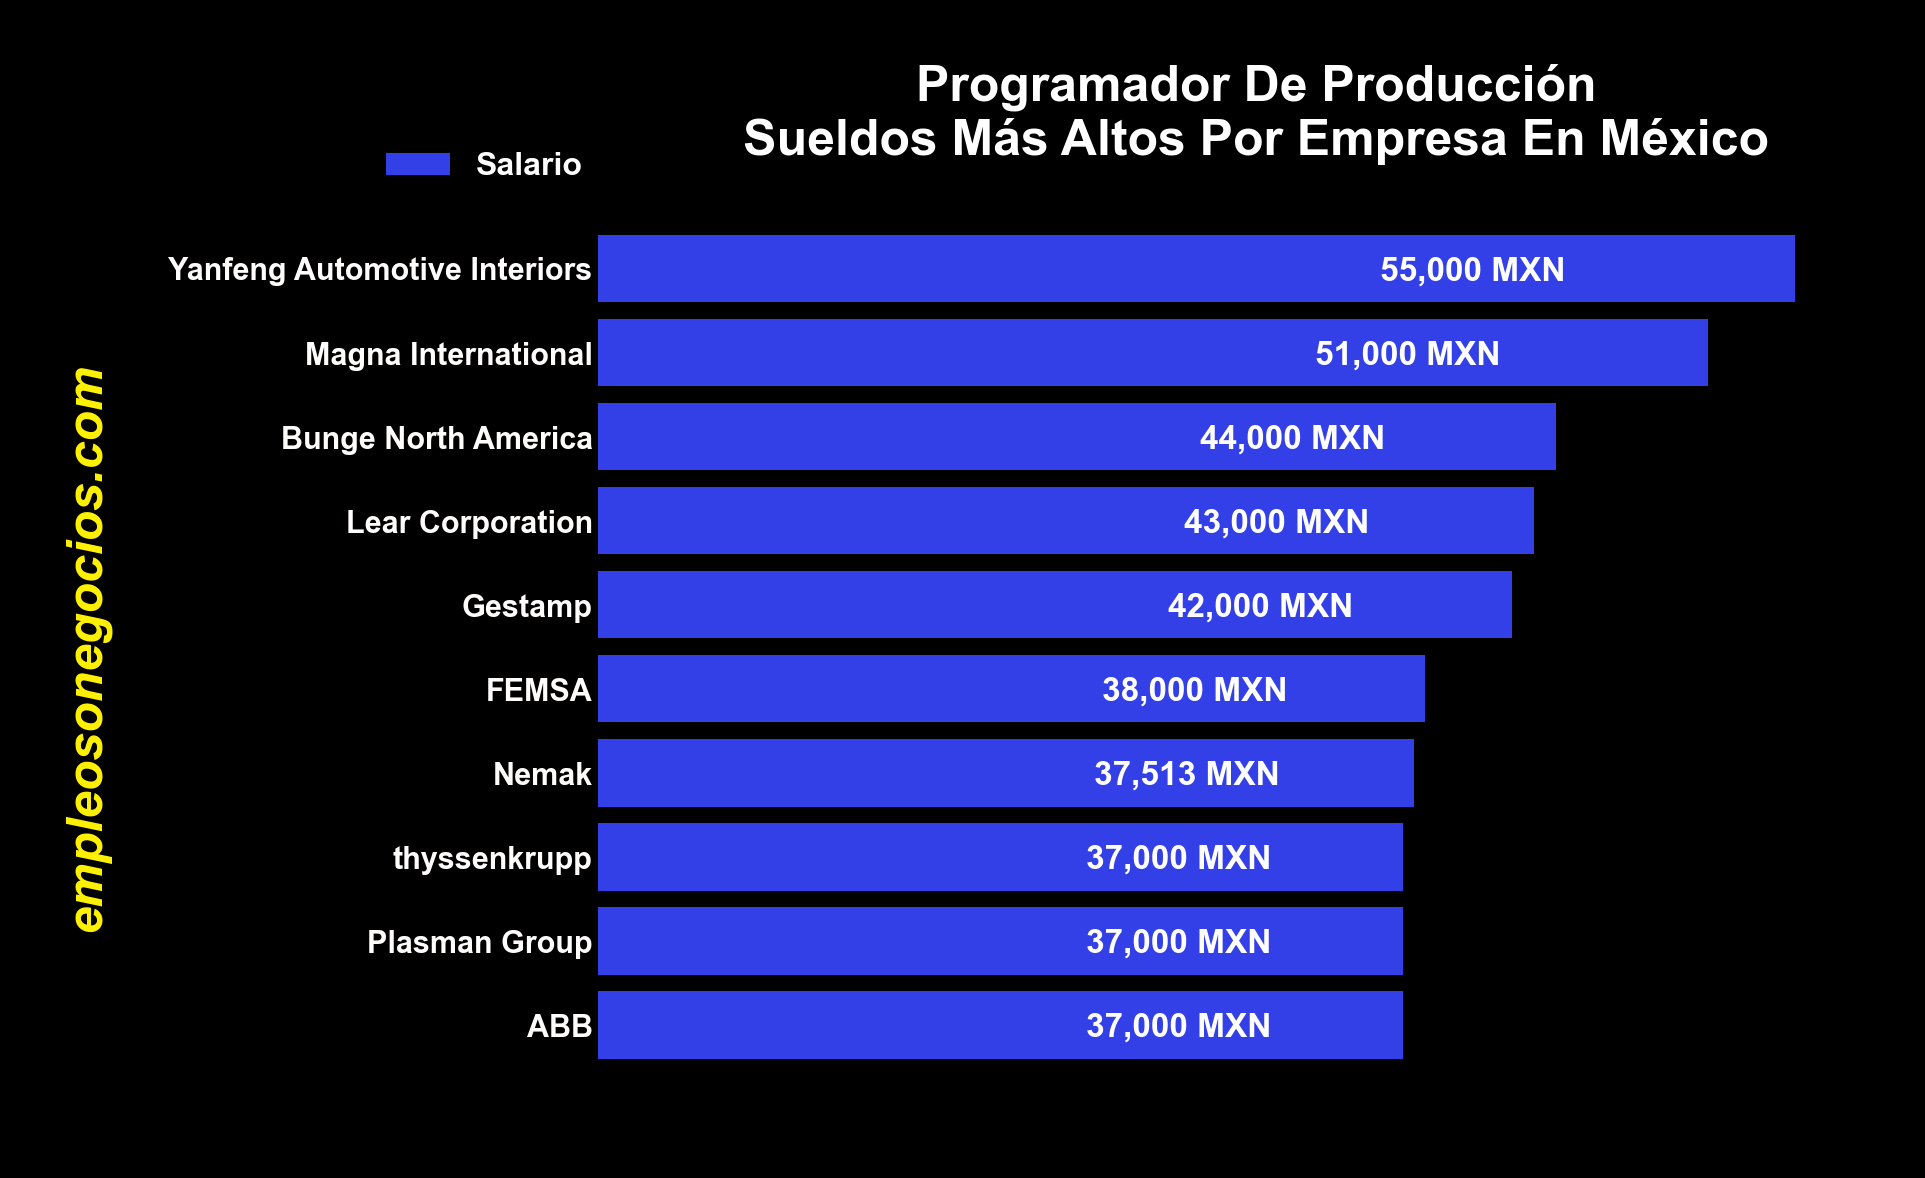 sueldos para programador de produccion en mexico mas altos por empresa